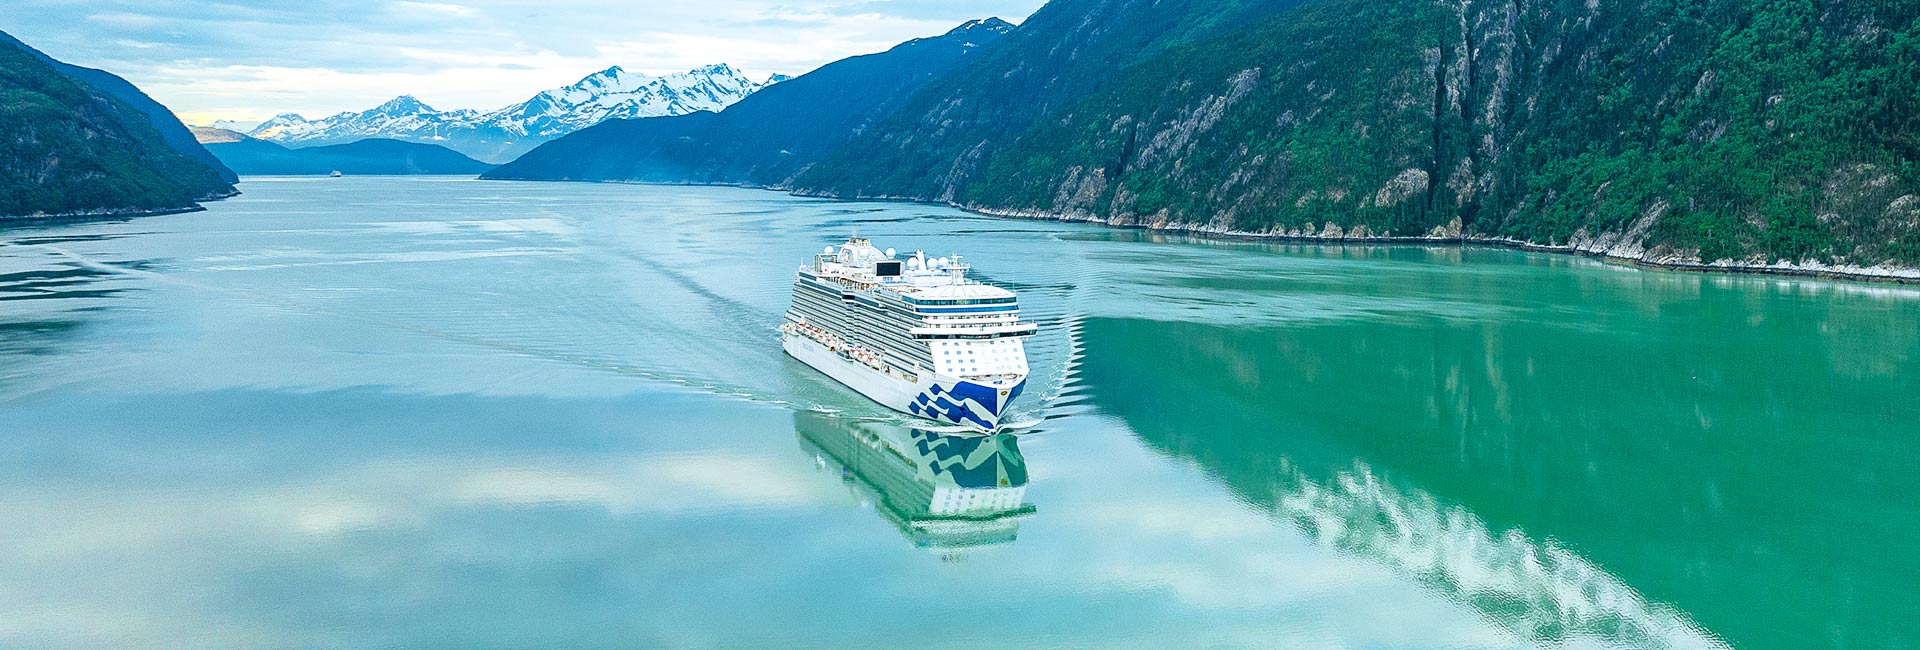 Cruise ship green water